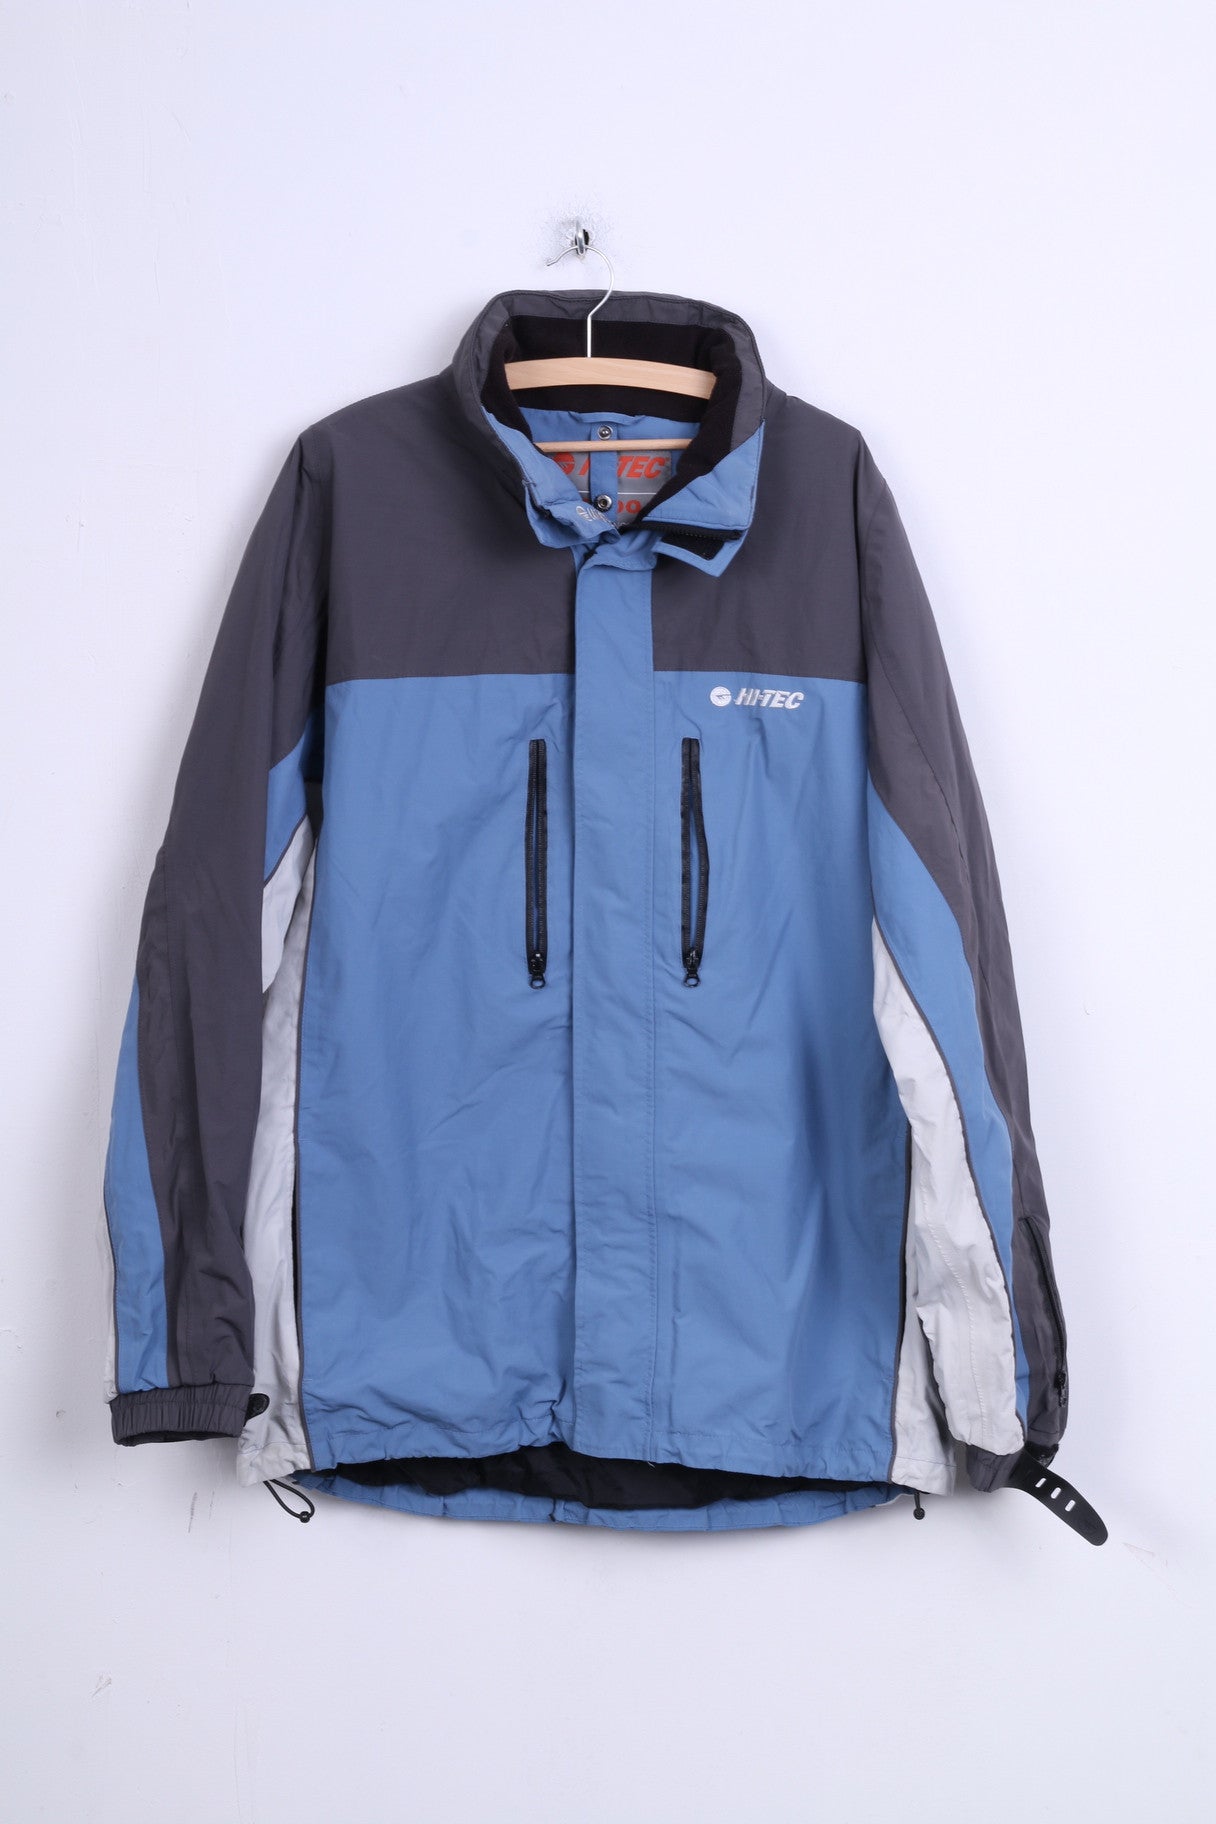 HI-TEC Womens XL Jacket Blue Winter 5000 High Technology Warm Waterproof